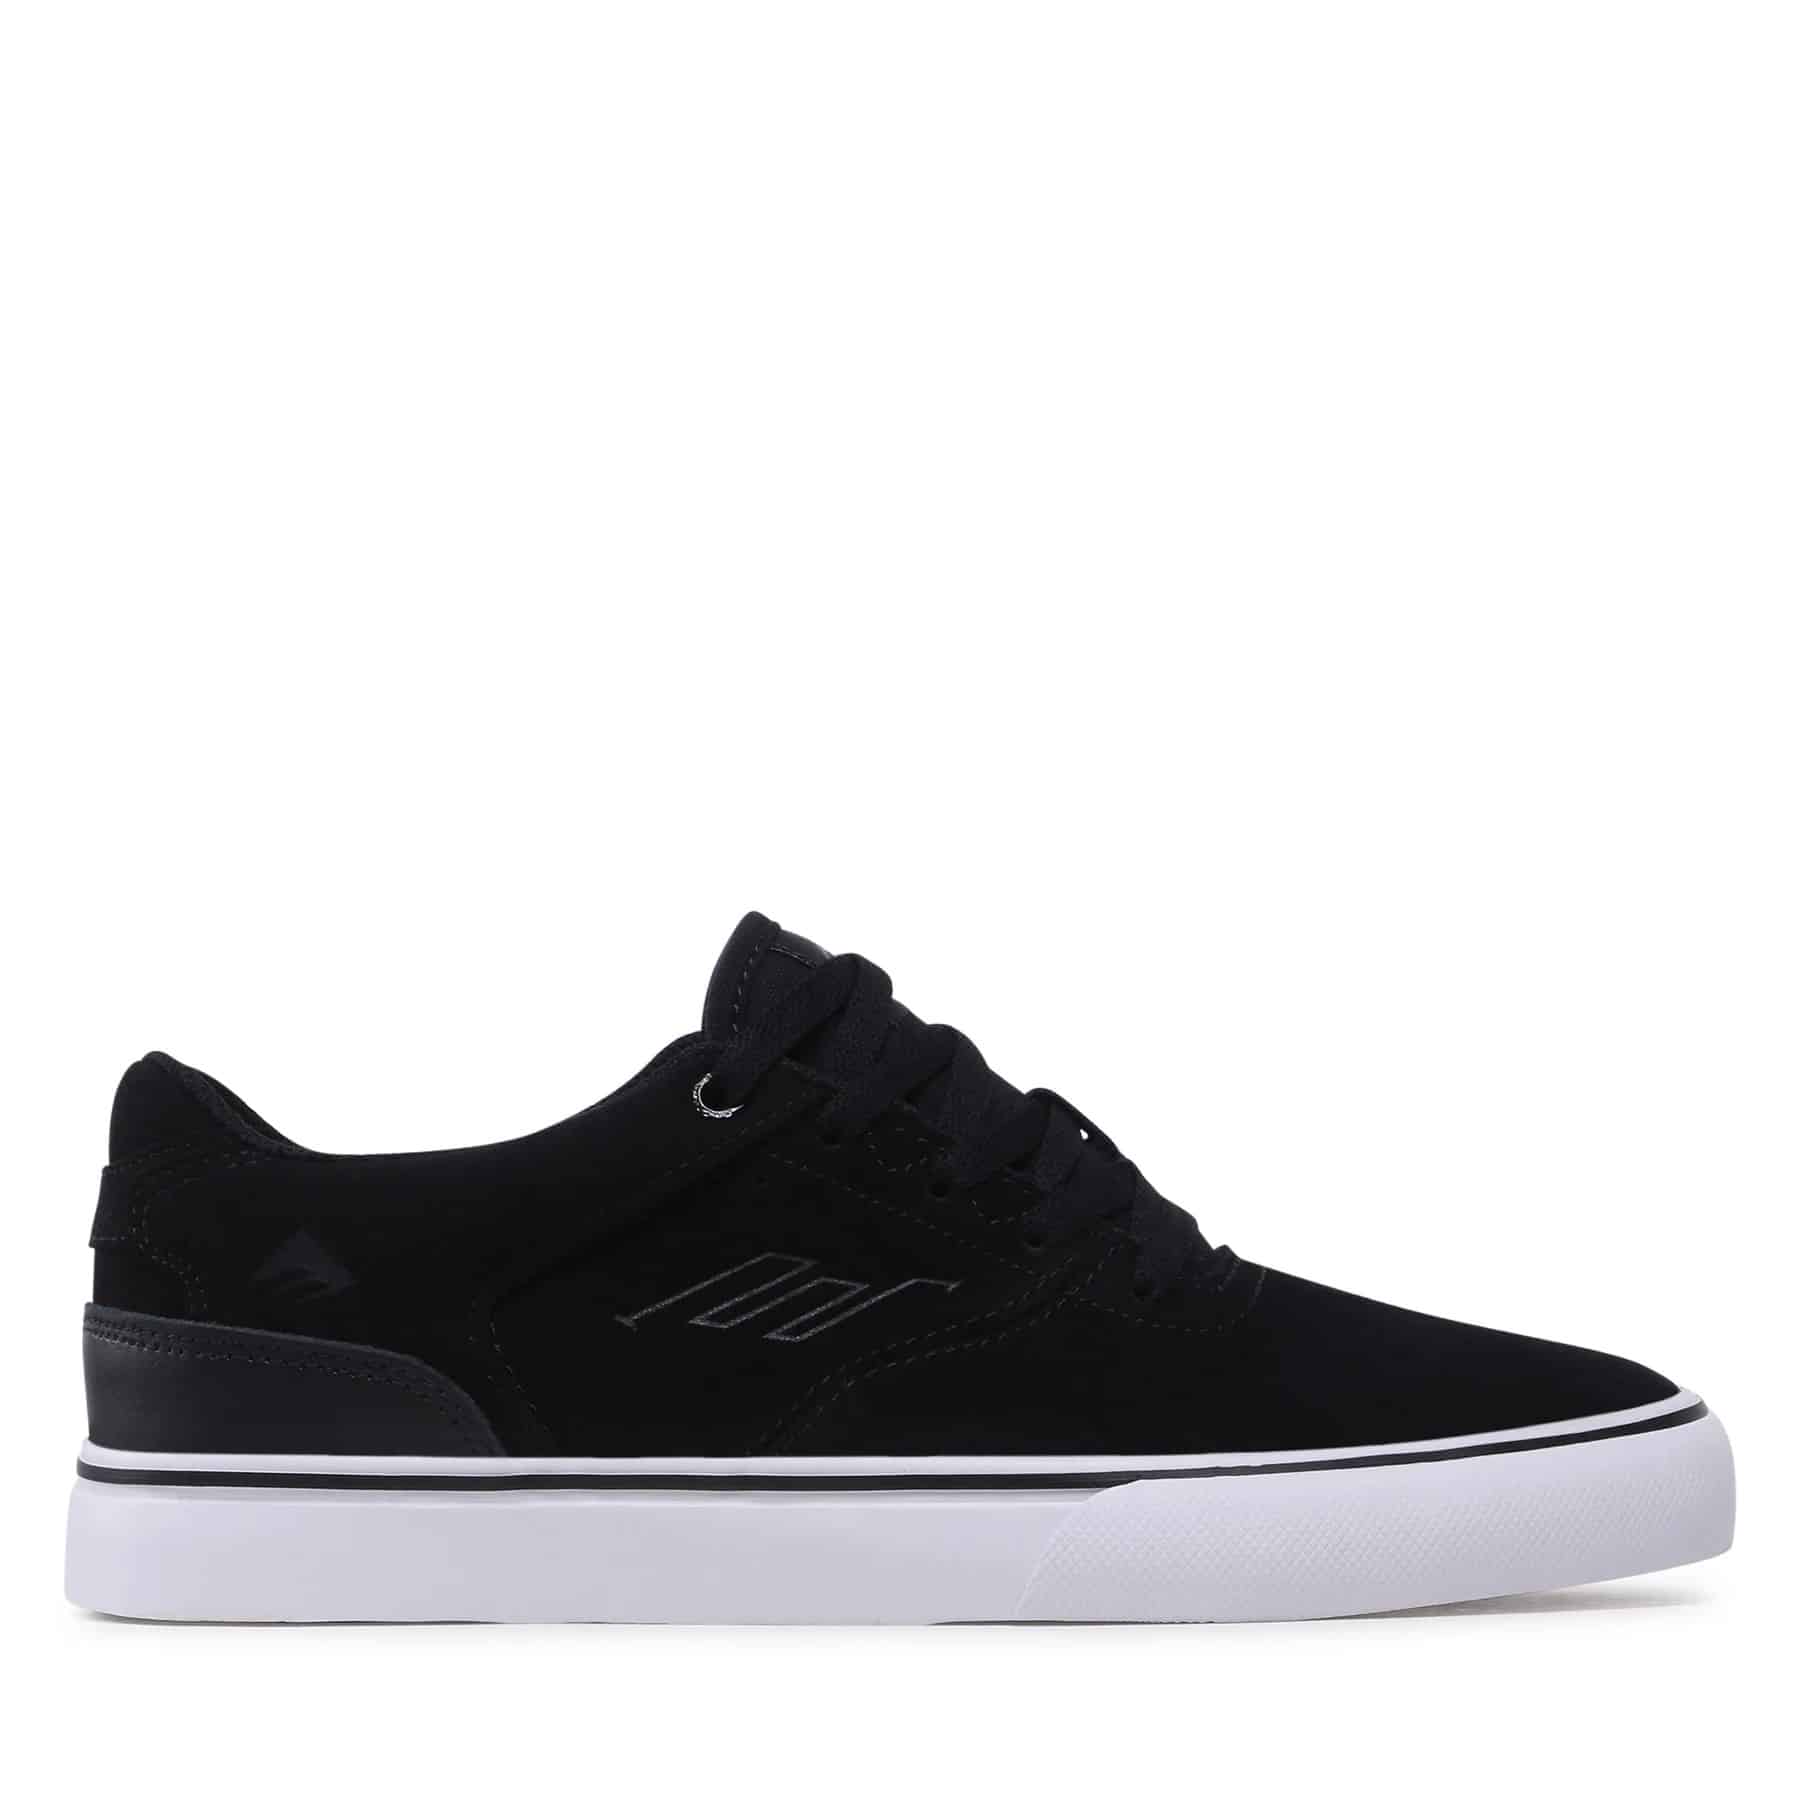 emerica the low vulc youth noir black white gum 979 chaussures enfant